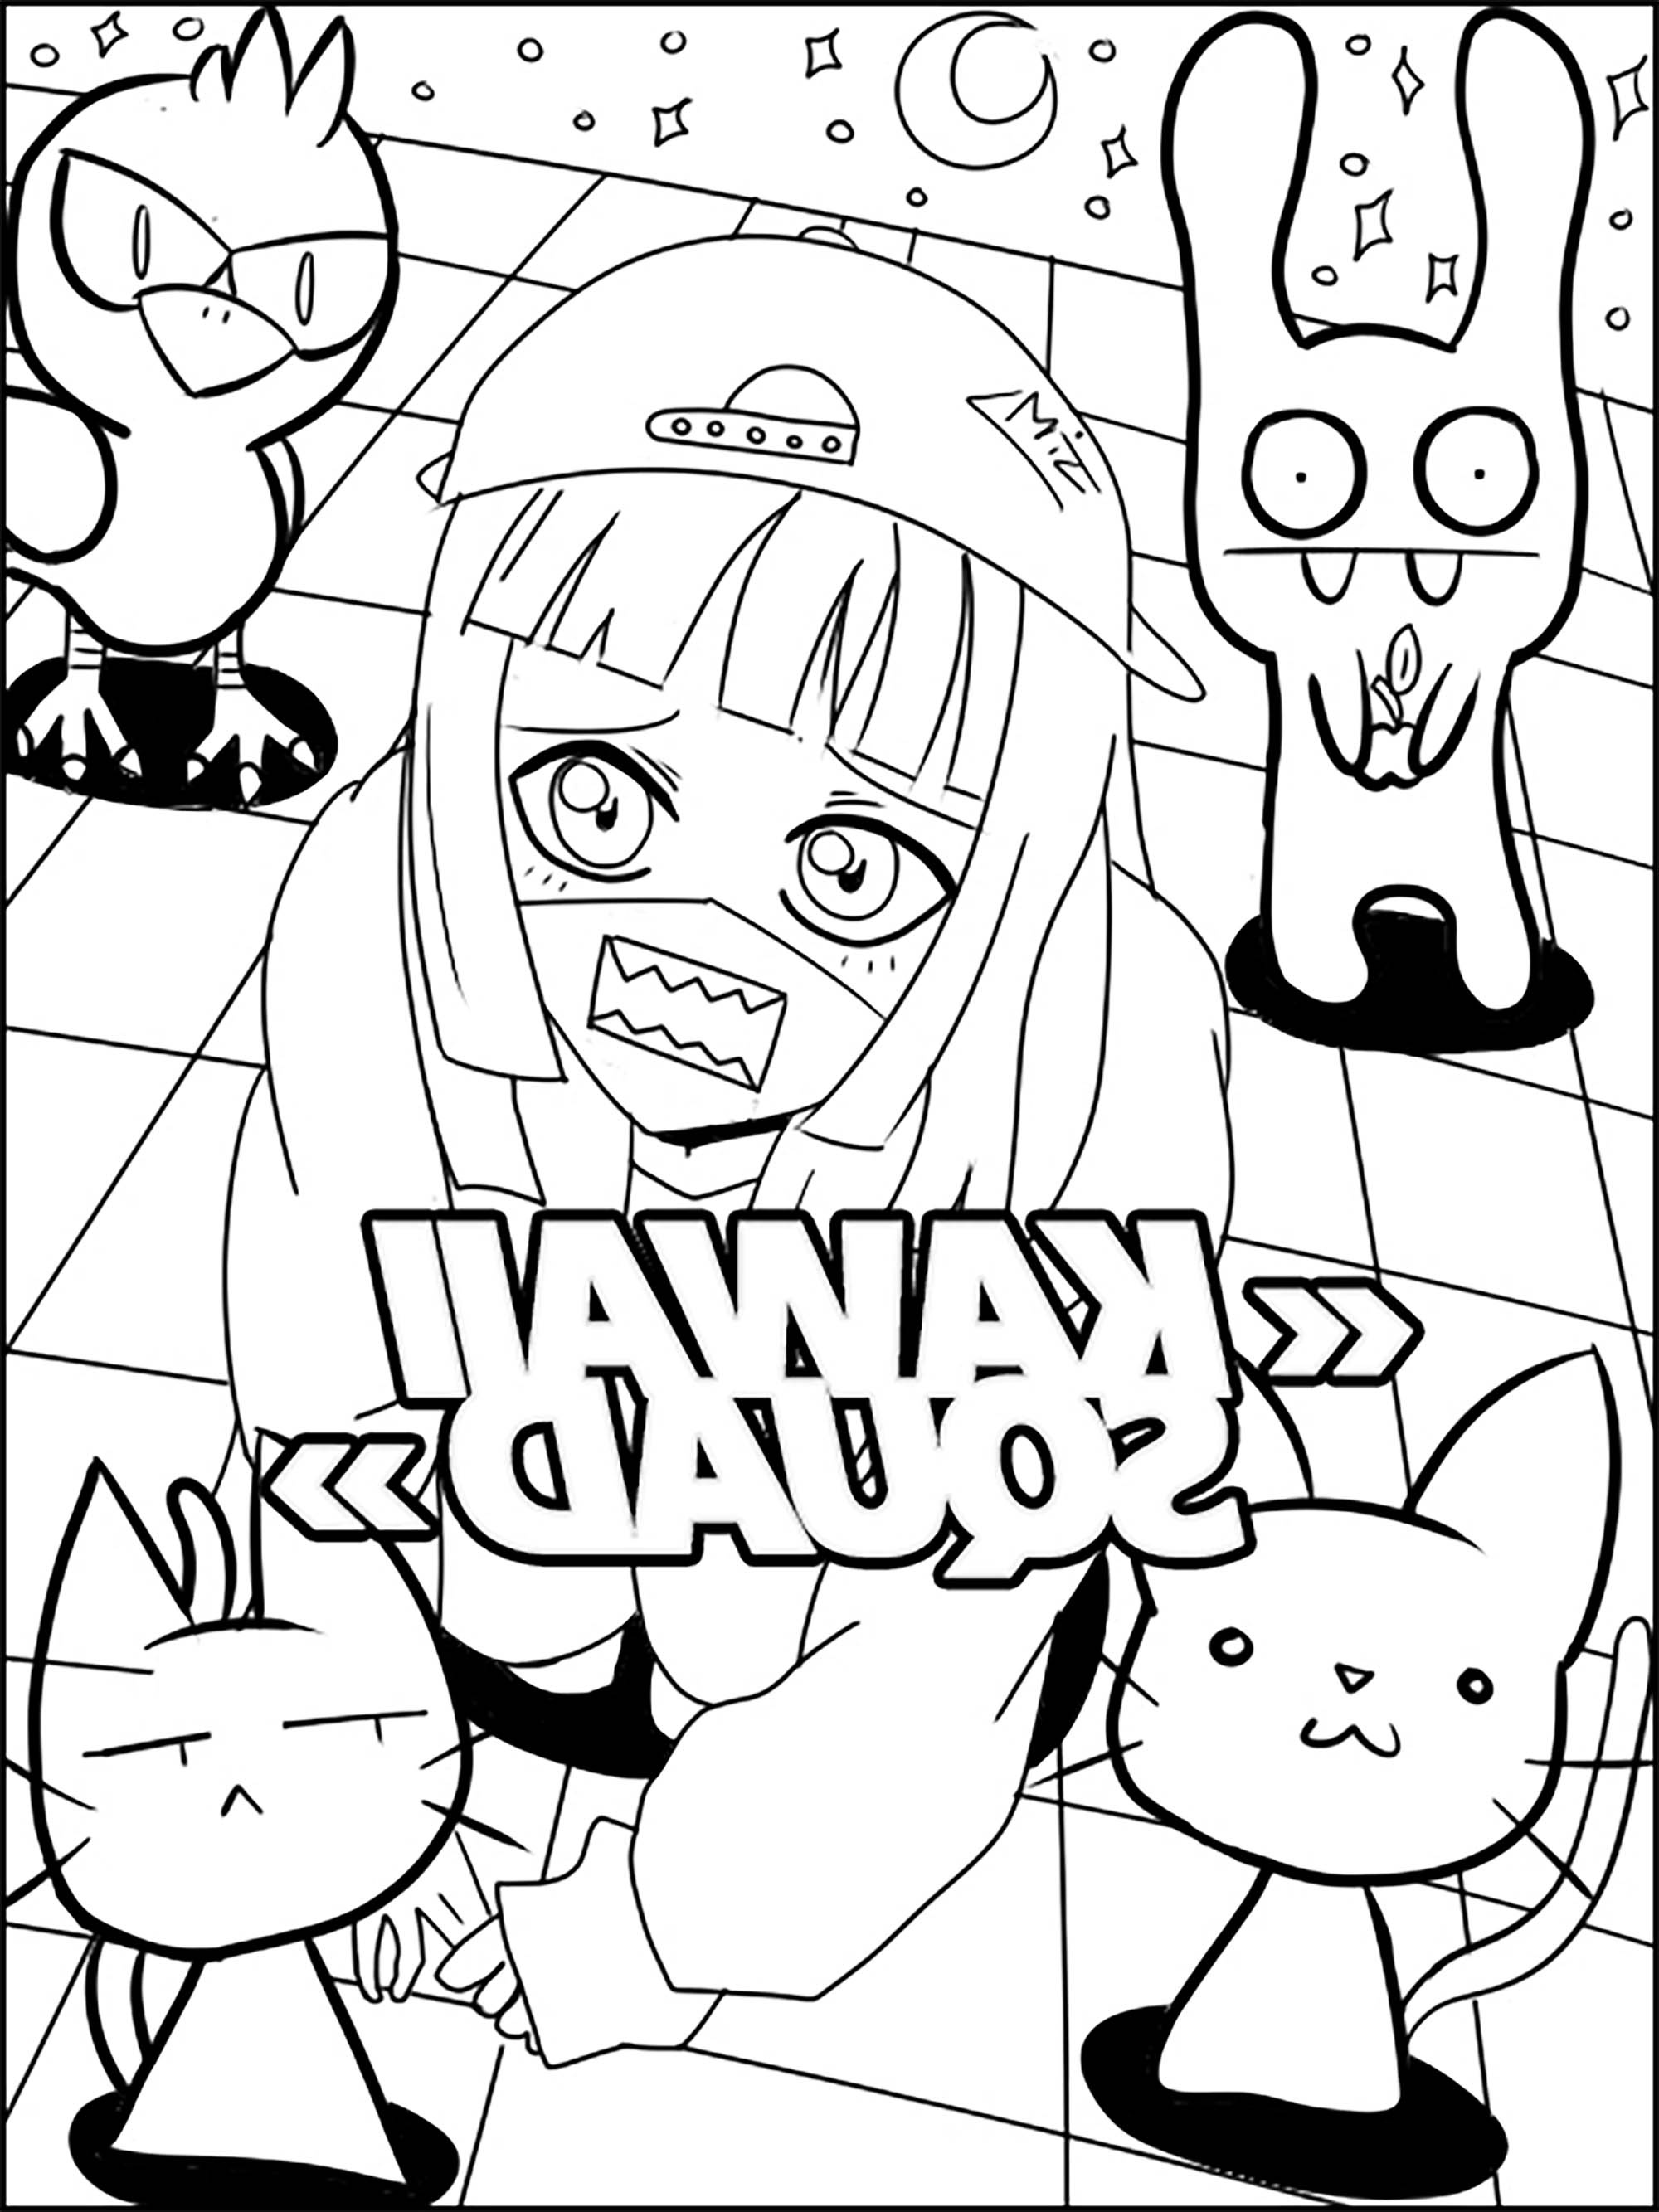 image=kawaii coloriage kawaii squad par jim 1